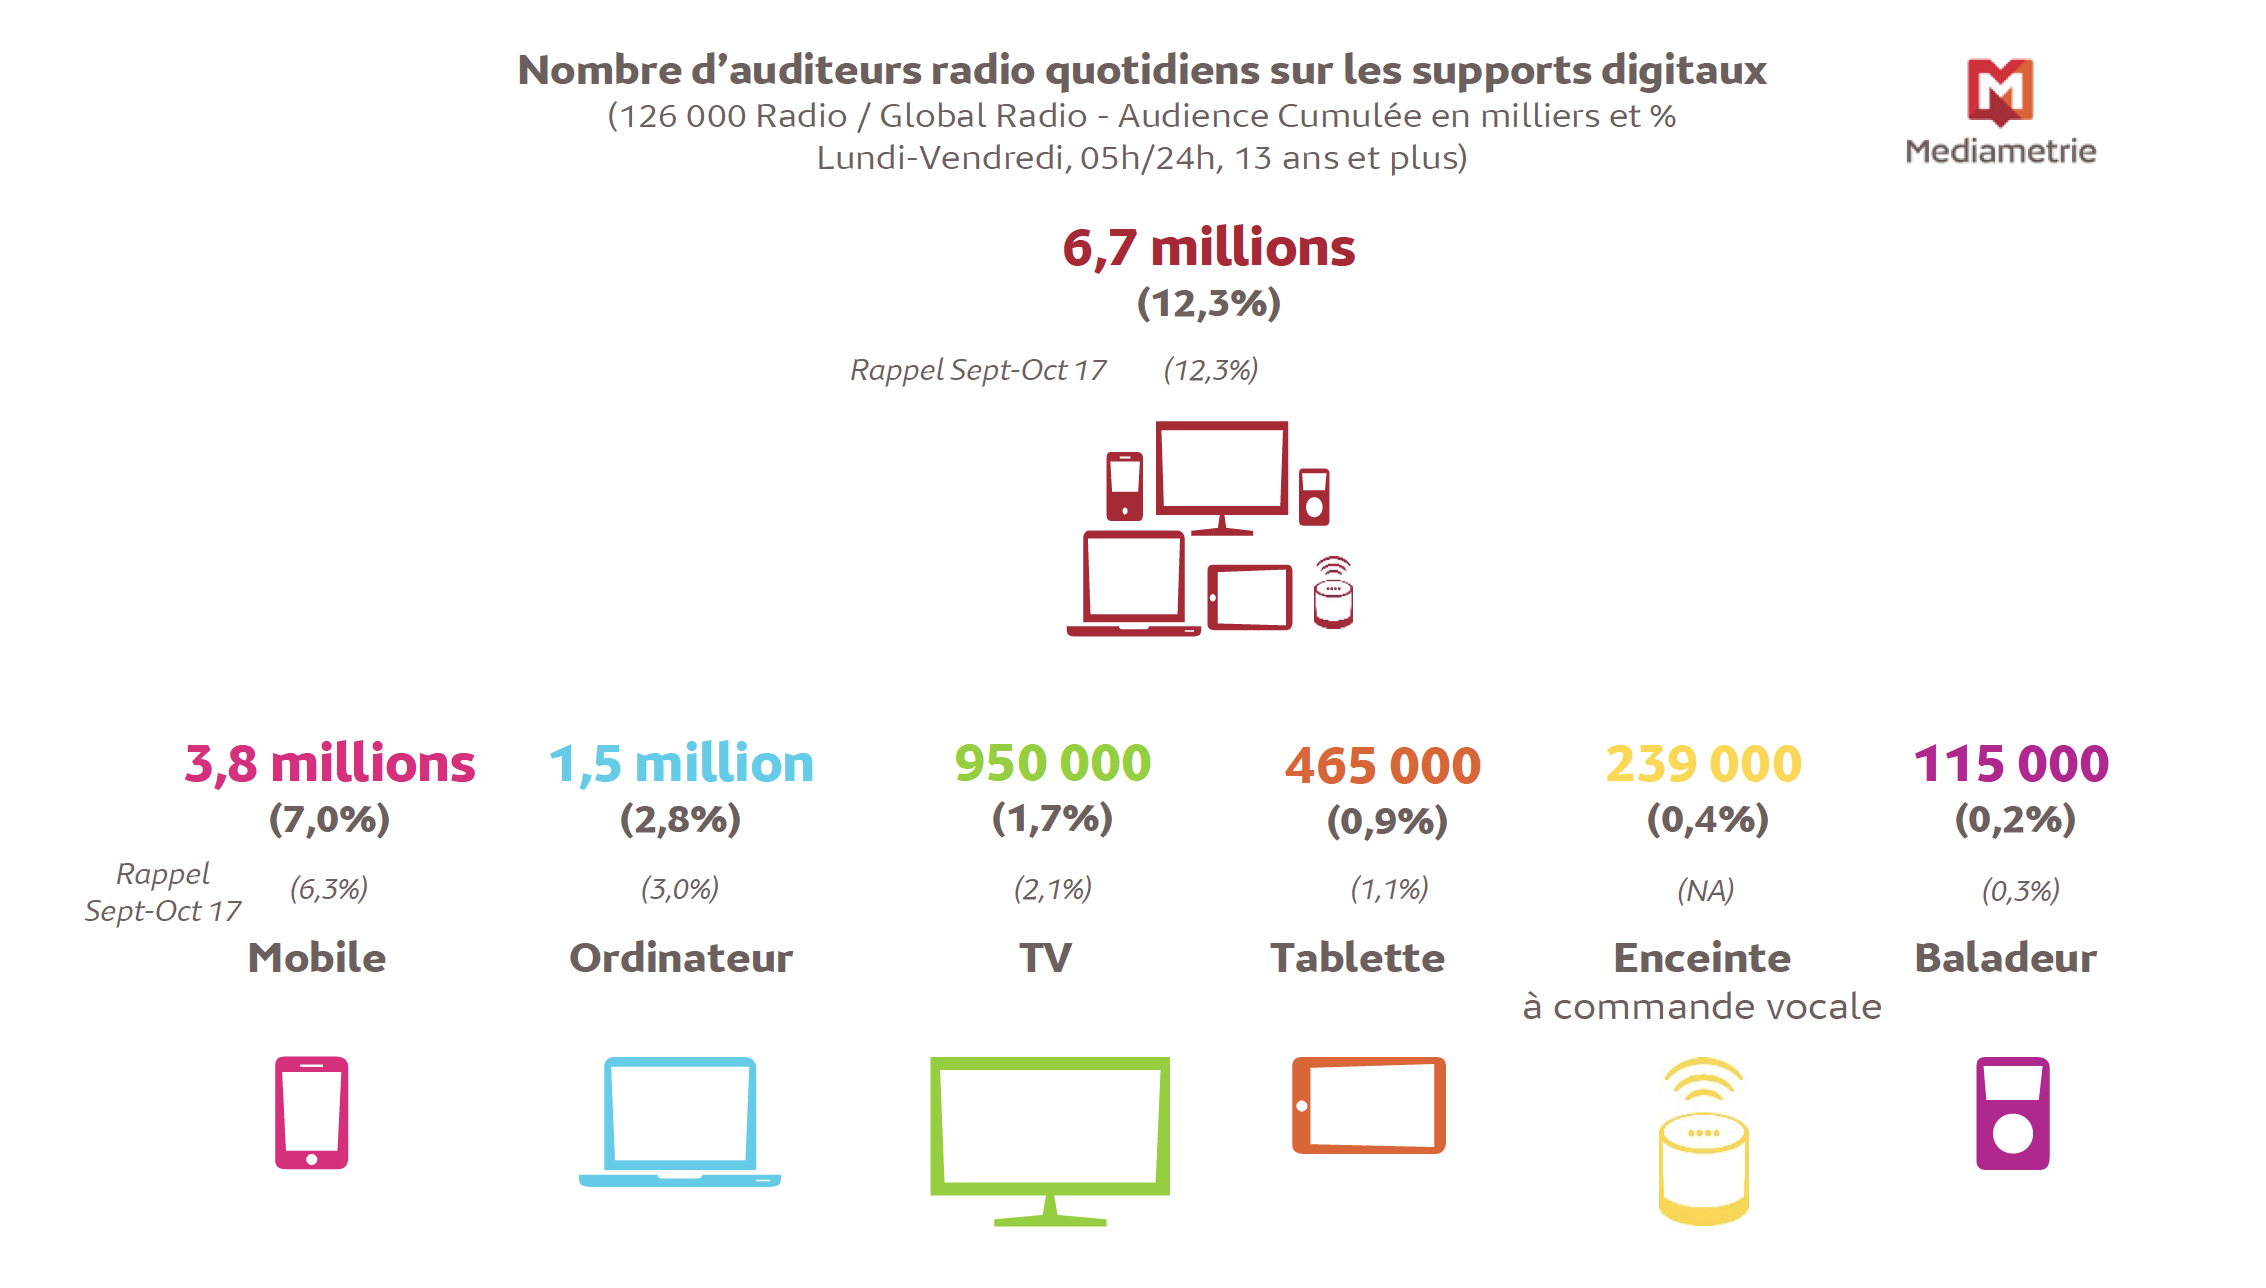 Source : Médiamétrie – 126 000 Radio / Global Radio – septembre-octobre 2018 – Copyright Médiamétrie – Tous droits réservés